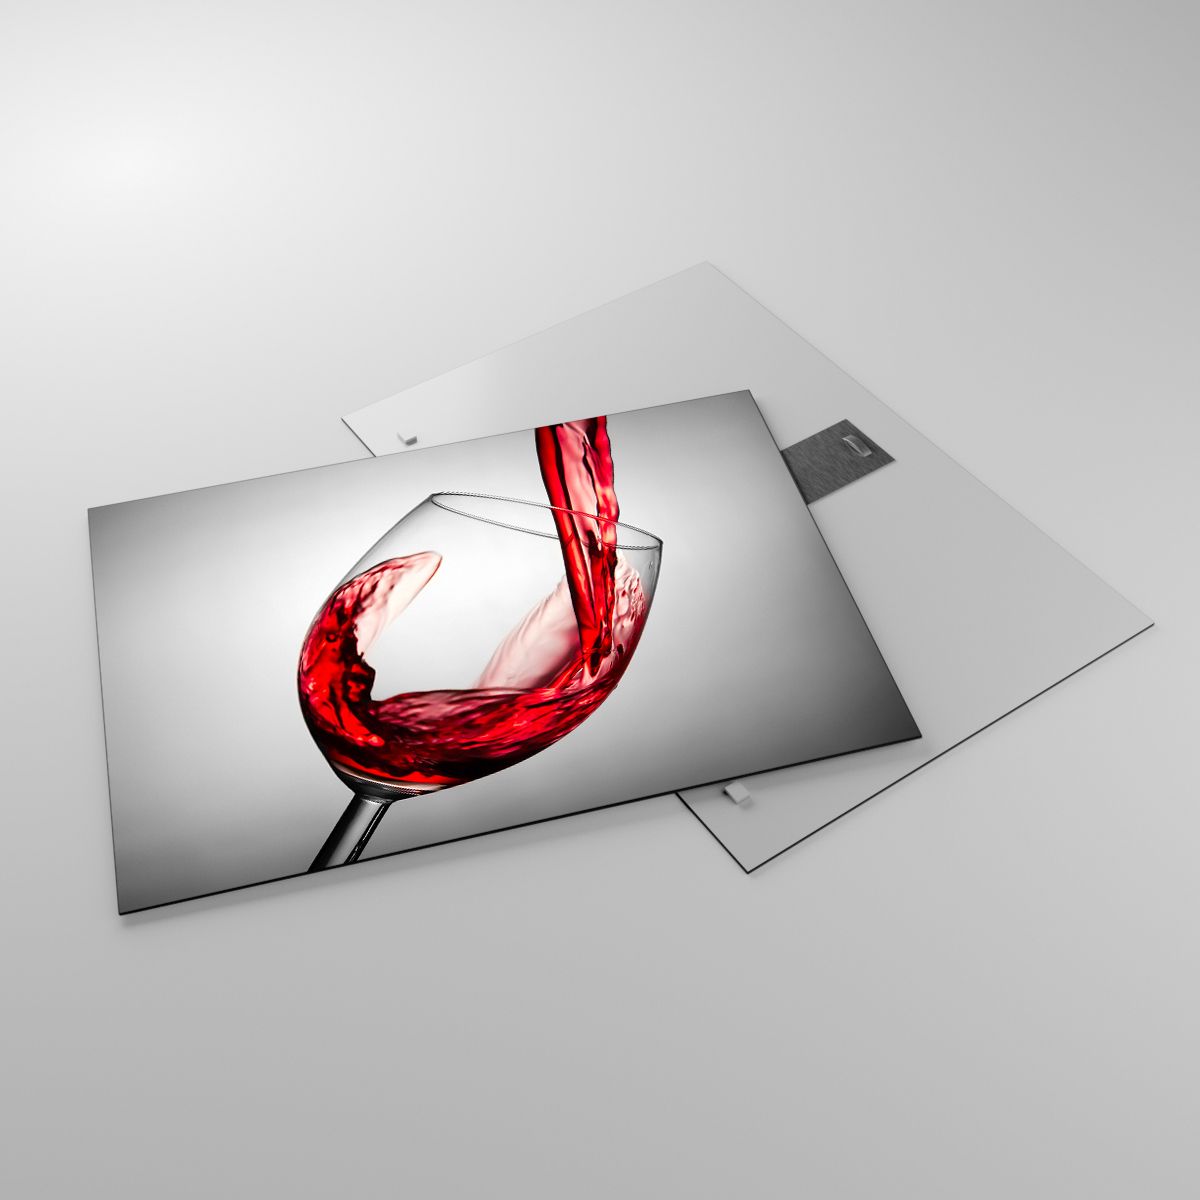 Glasbild Weinglas, Glasbild Rotwein, Glasbild Gastronomie, Glasbild Spiel, Glasbild Toast